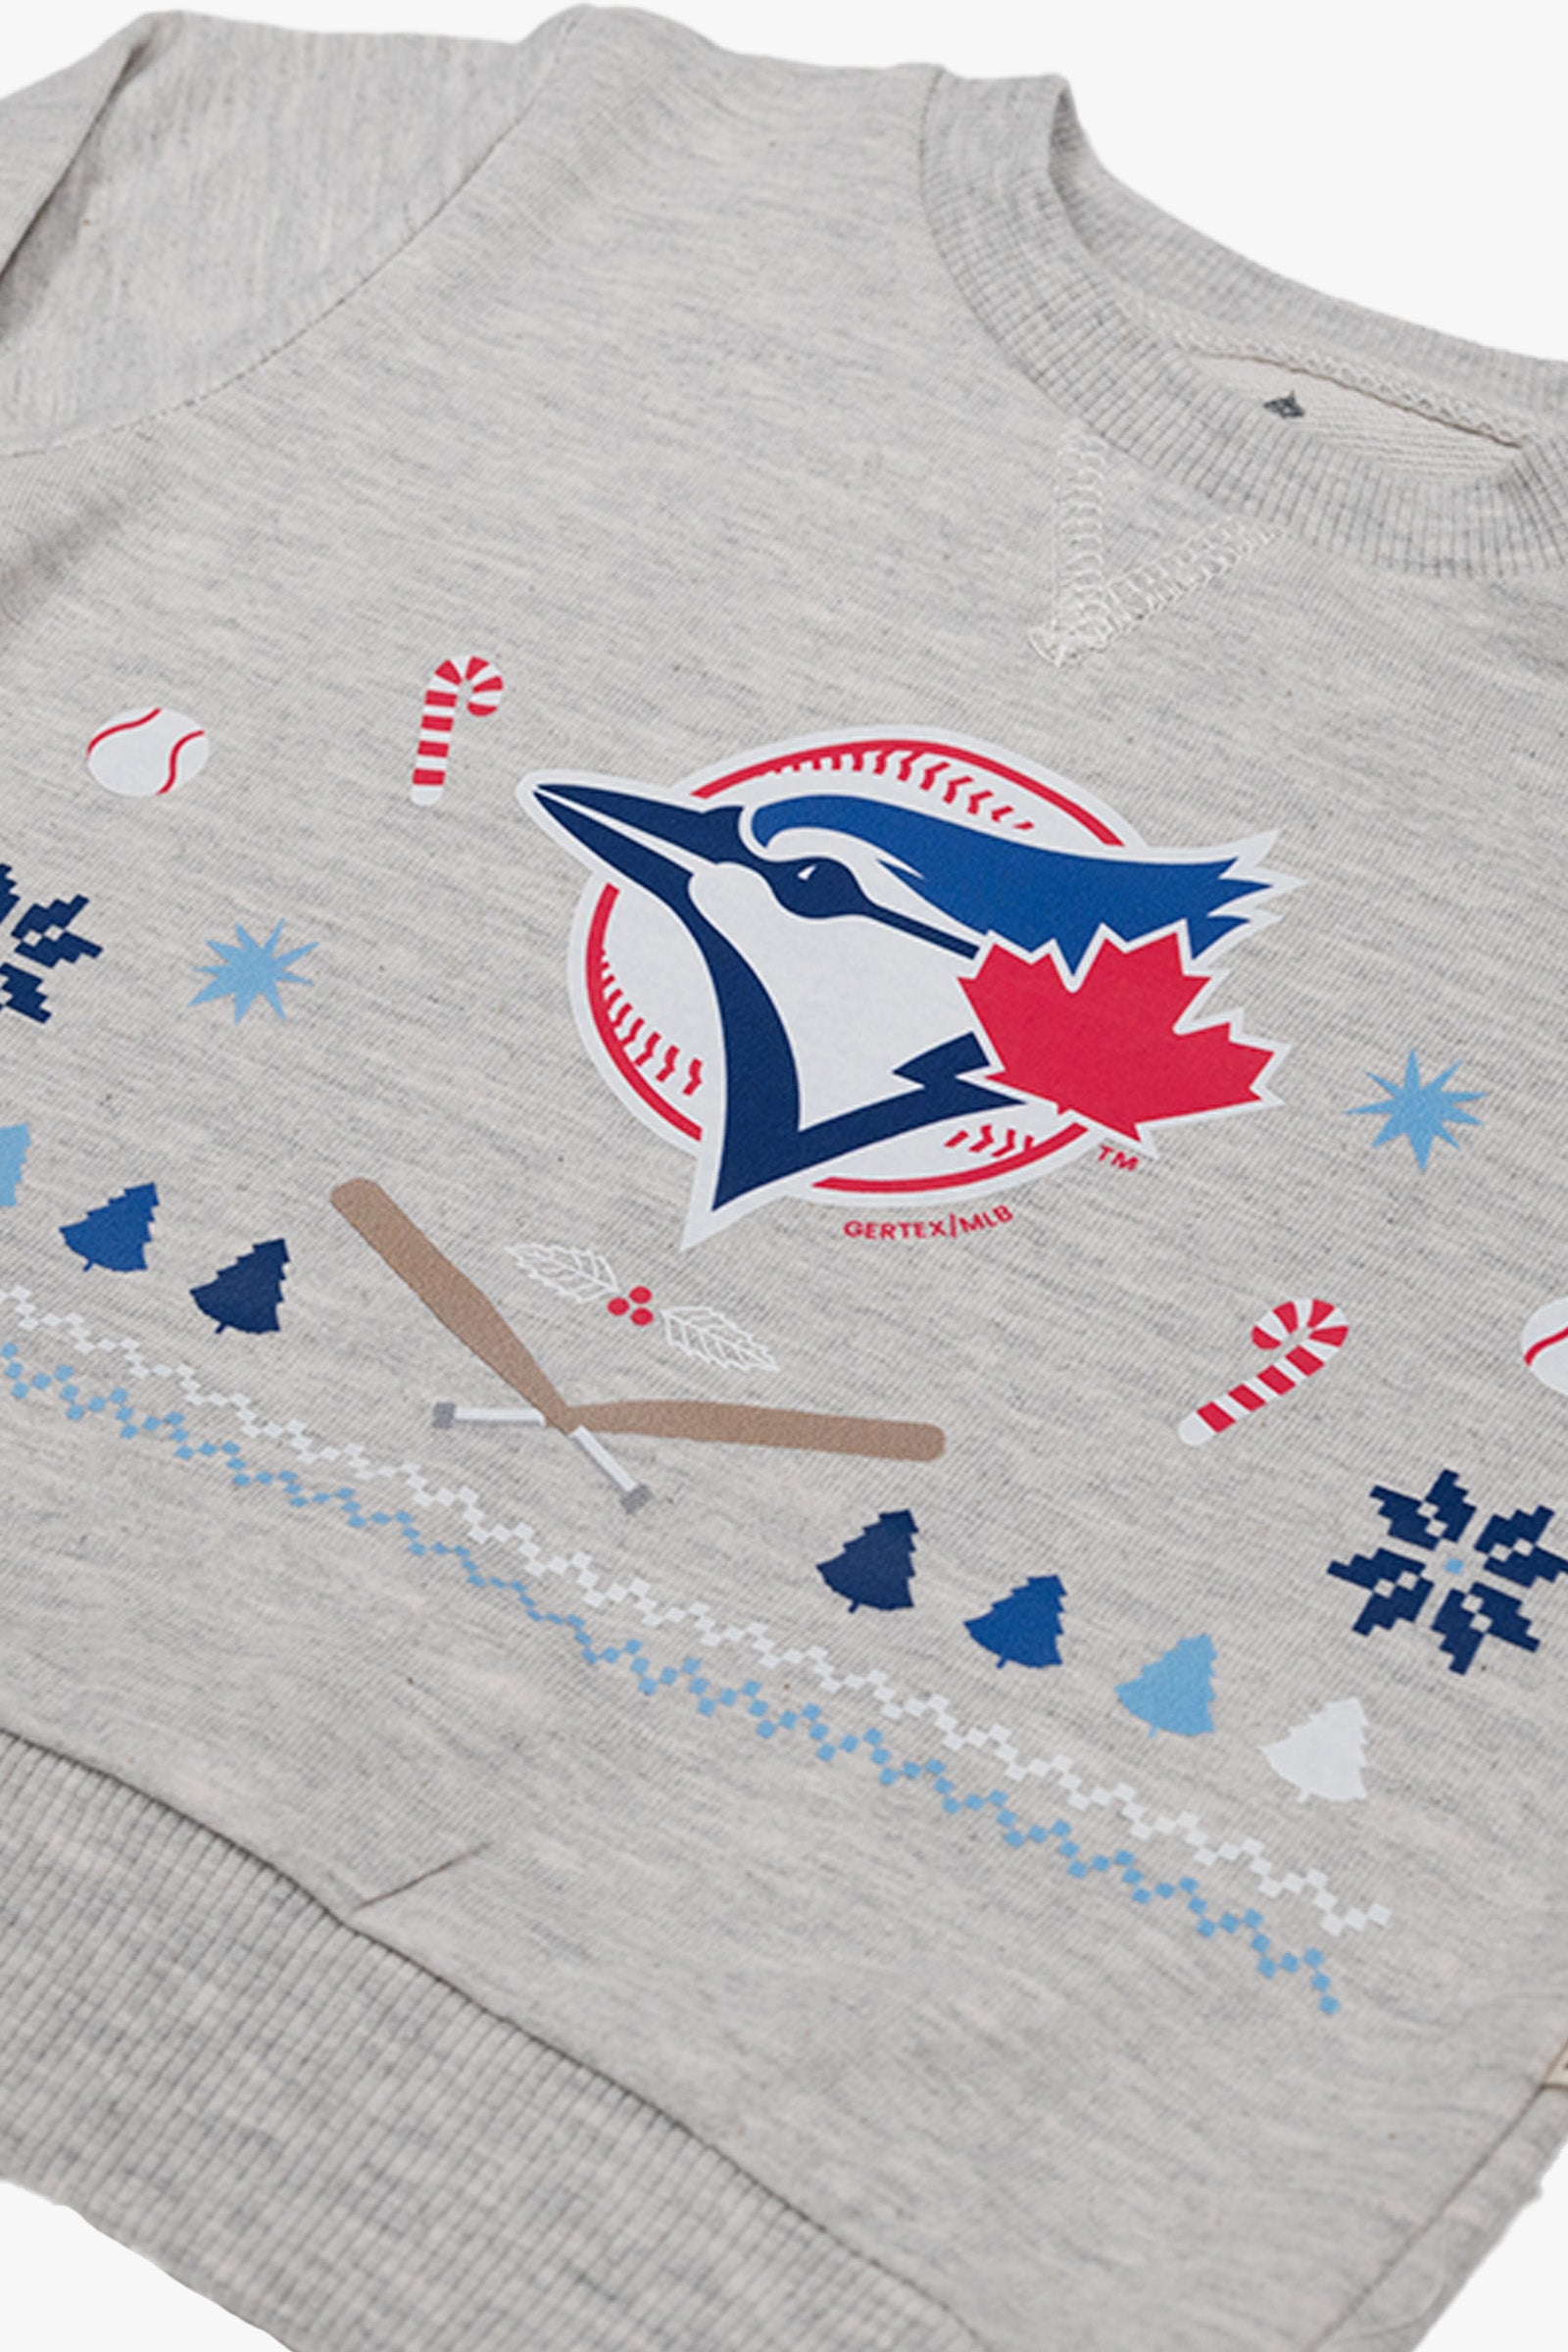 Gertex MLB Toronto Blue Jays Baby Ugly Holiday Sweater